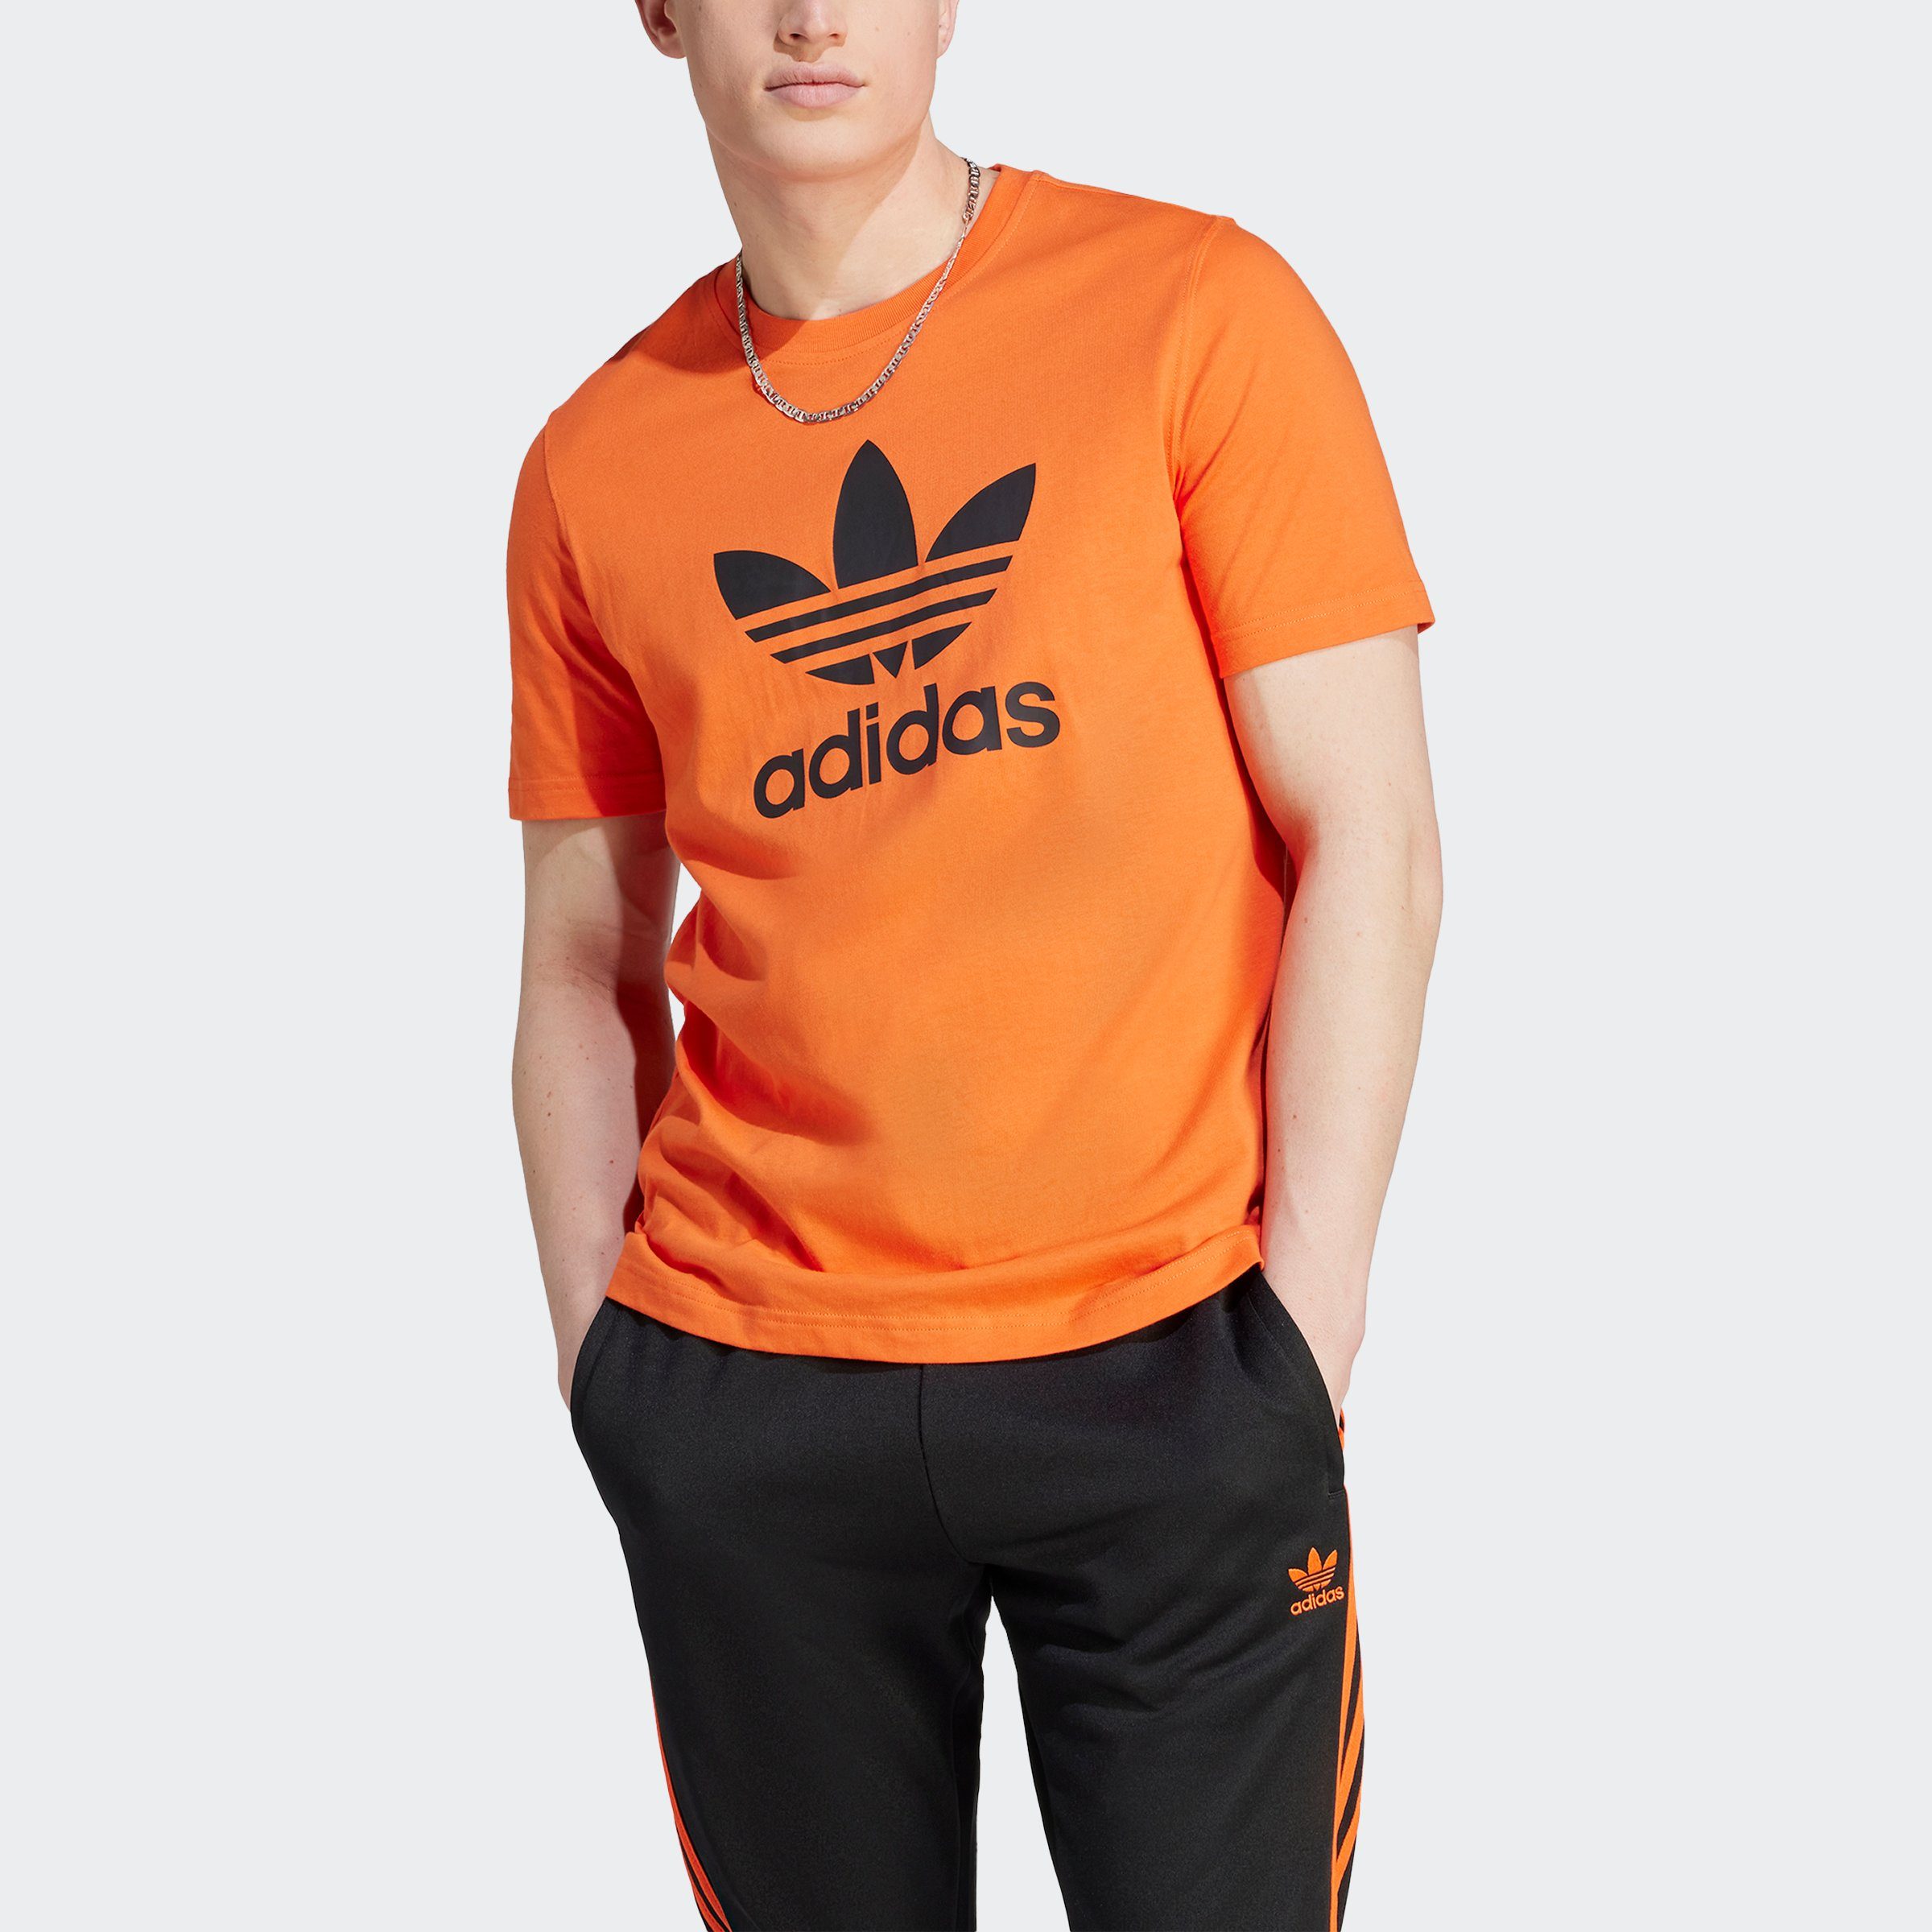 Originals Orange Semi adidas Impact / Black T-Shirt TREFOIL T-SHIRT